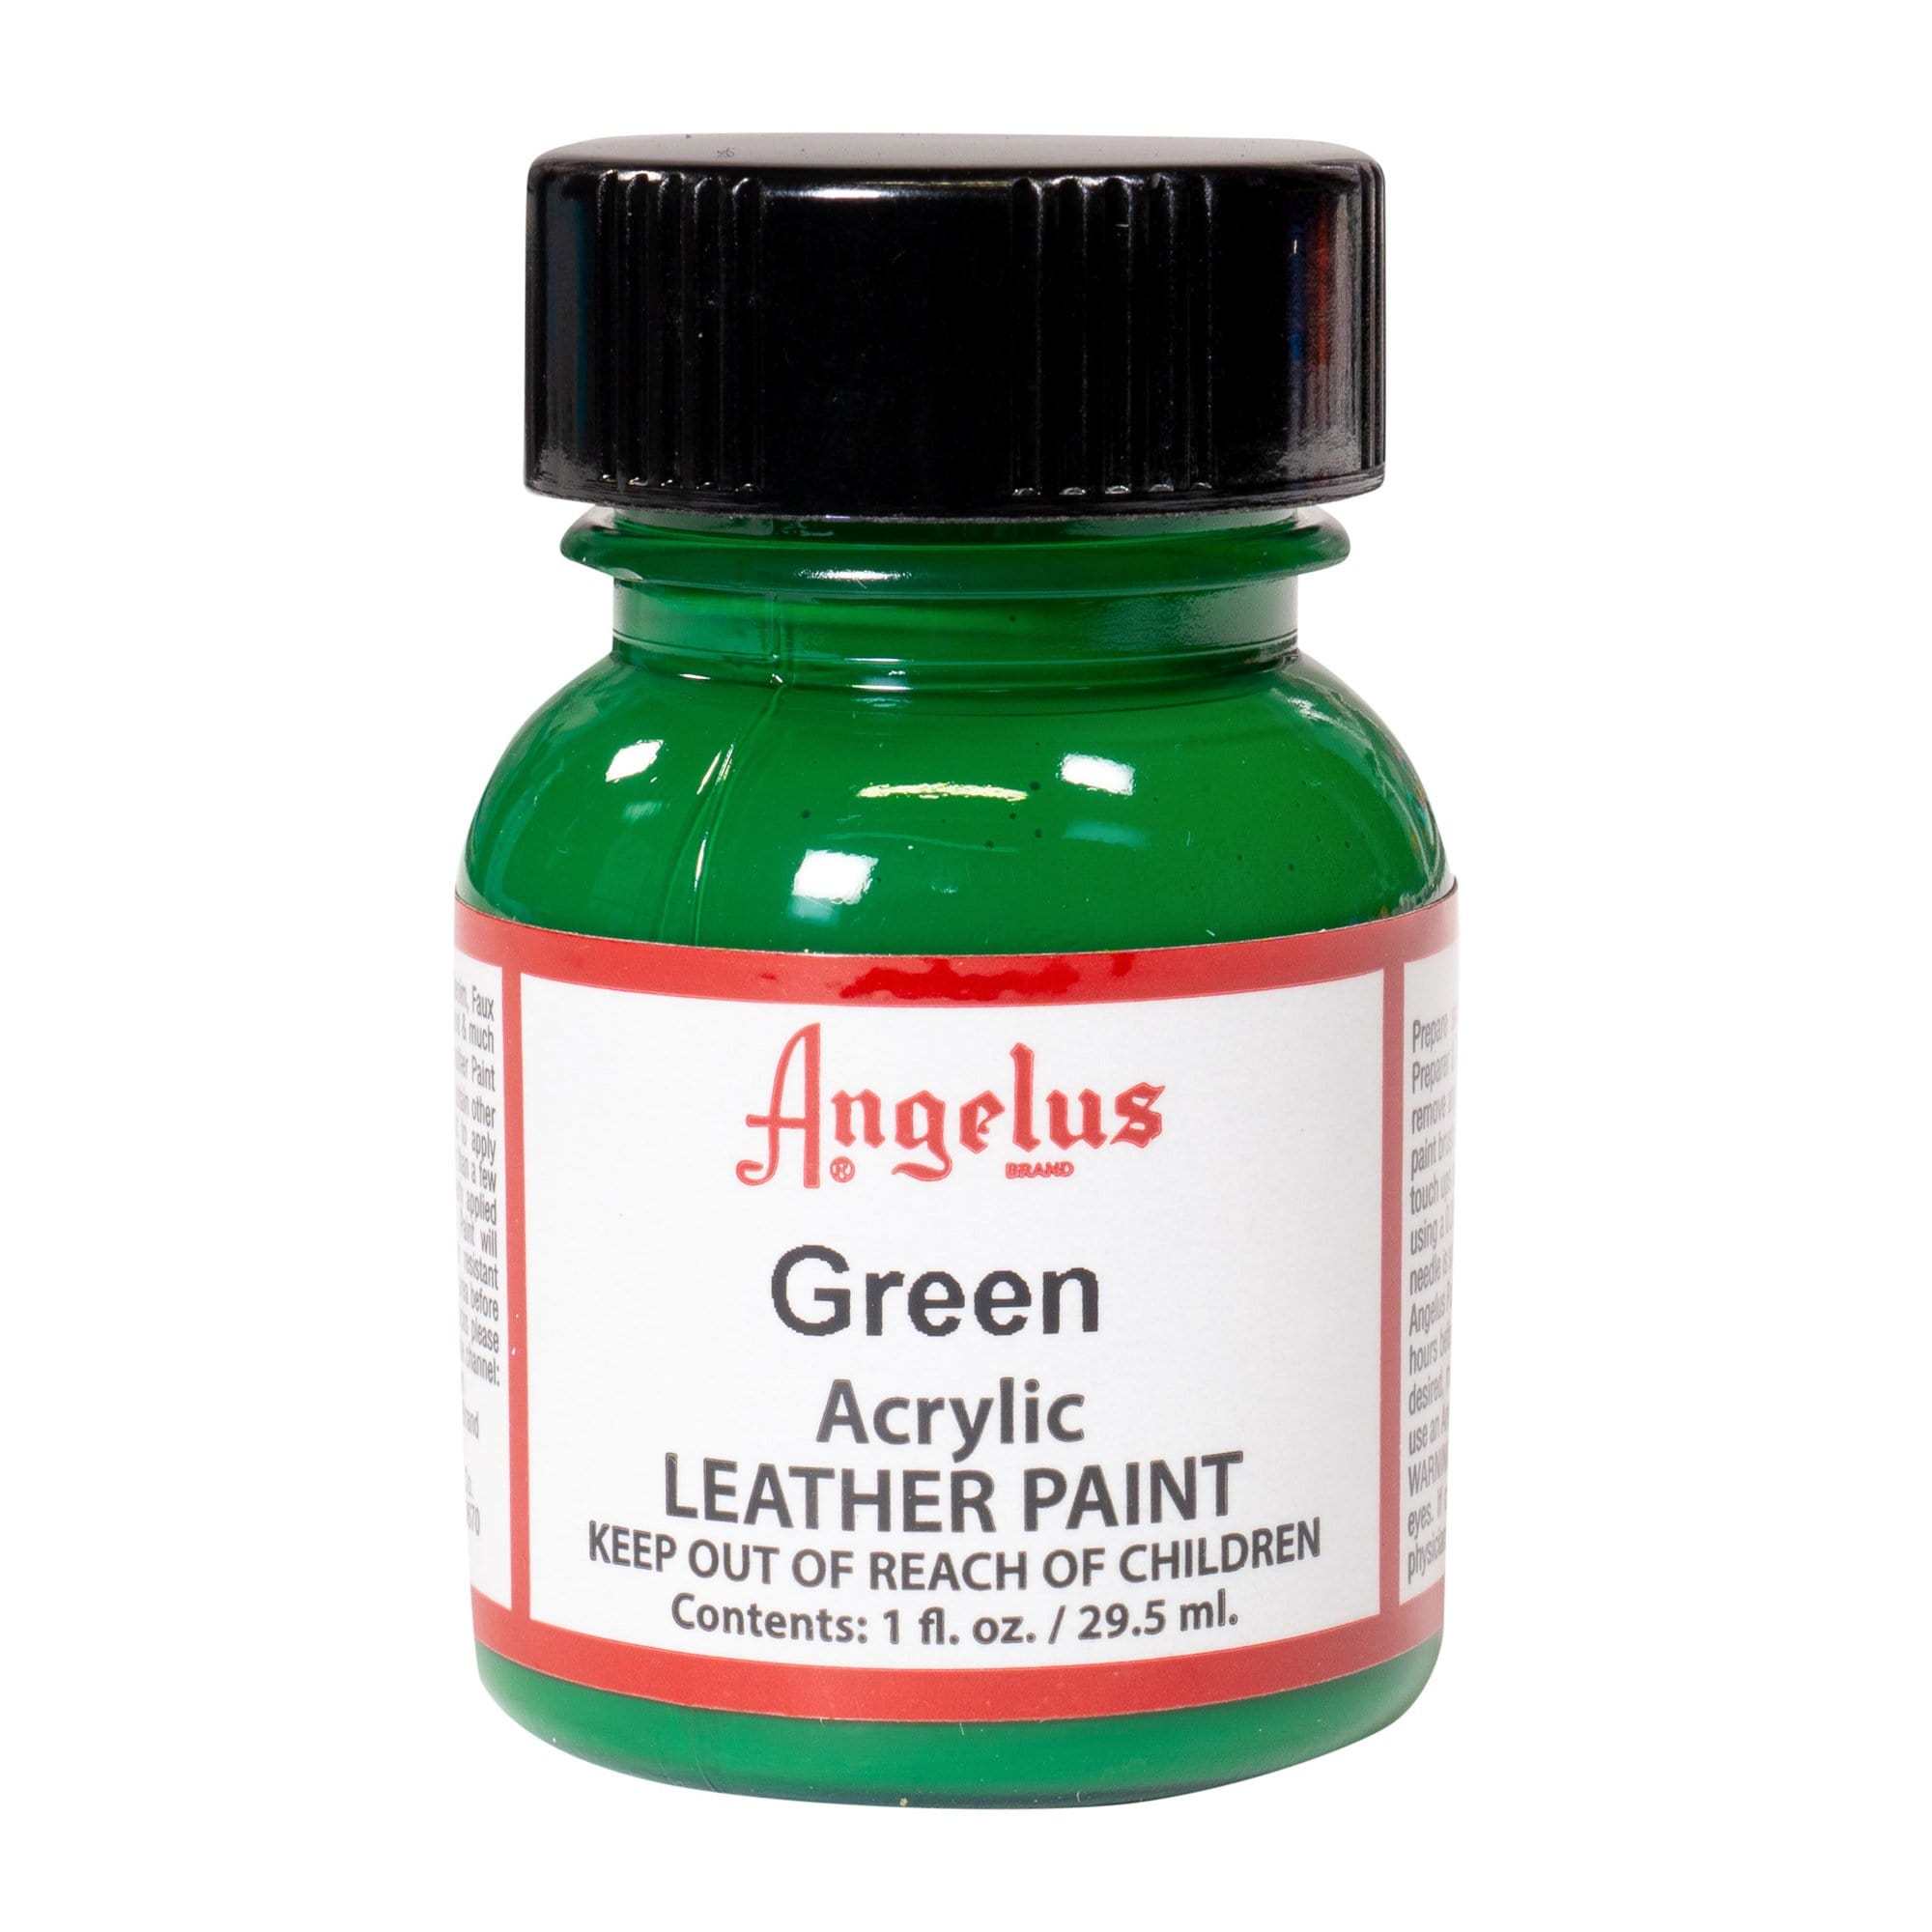 Angelus Acrylic Leather Paint - Green, 1 oz